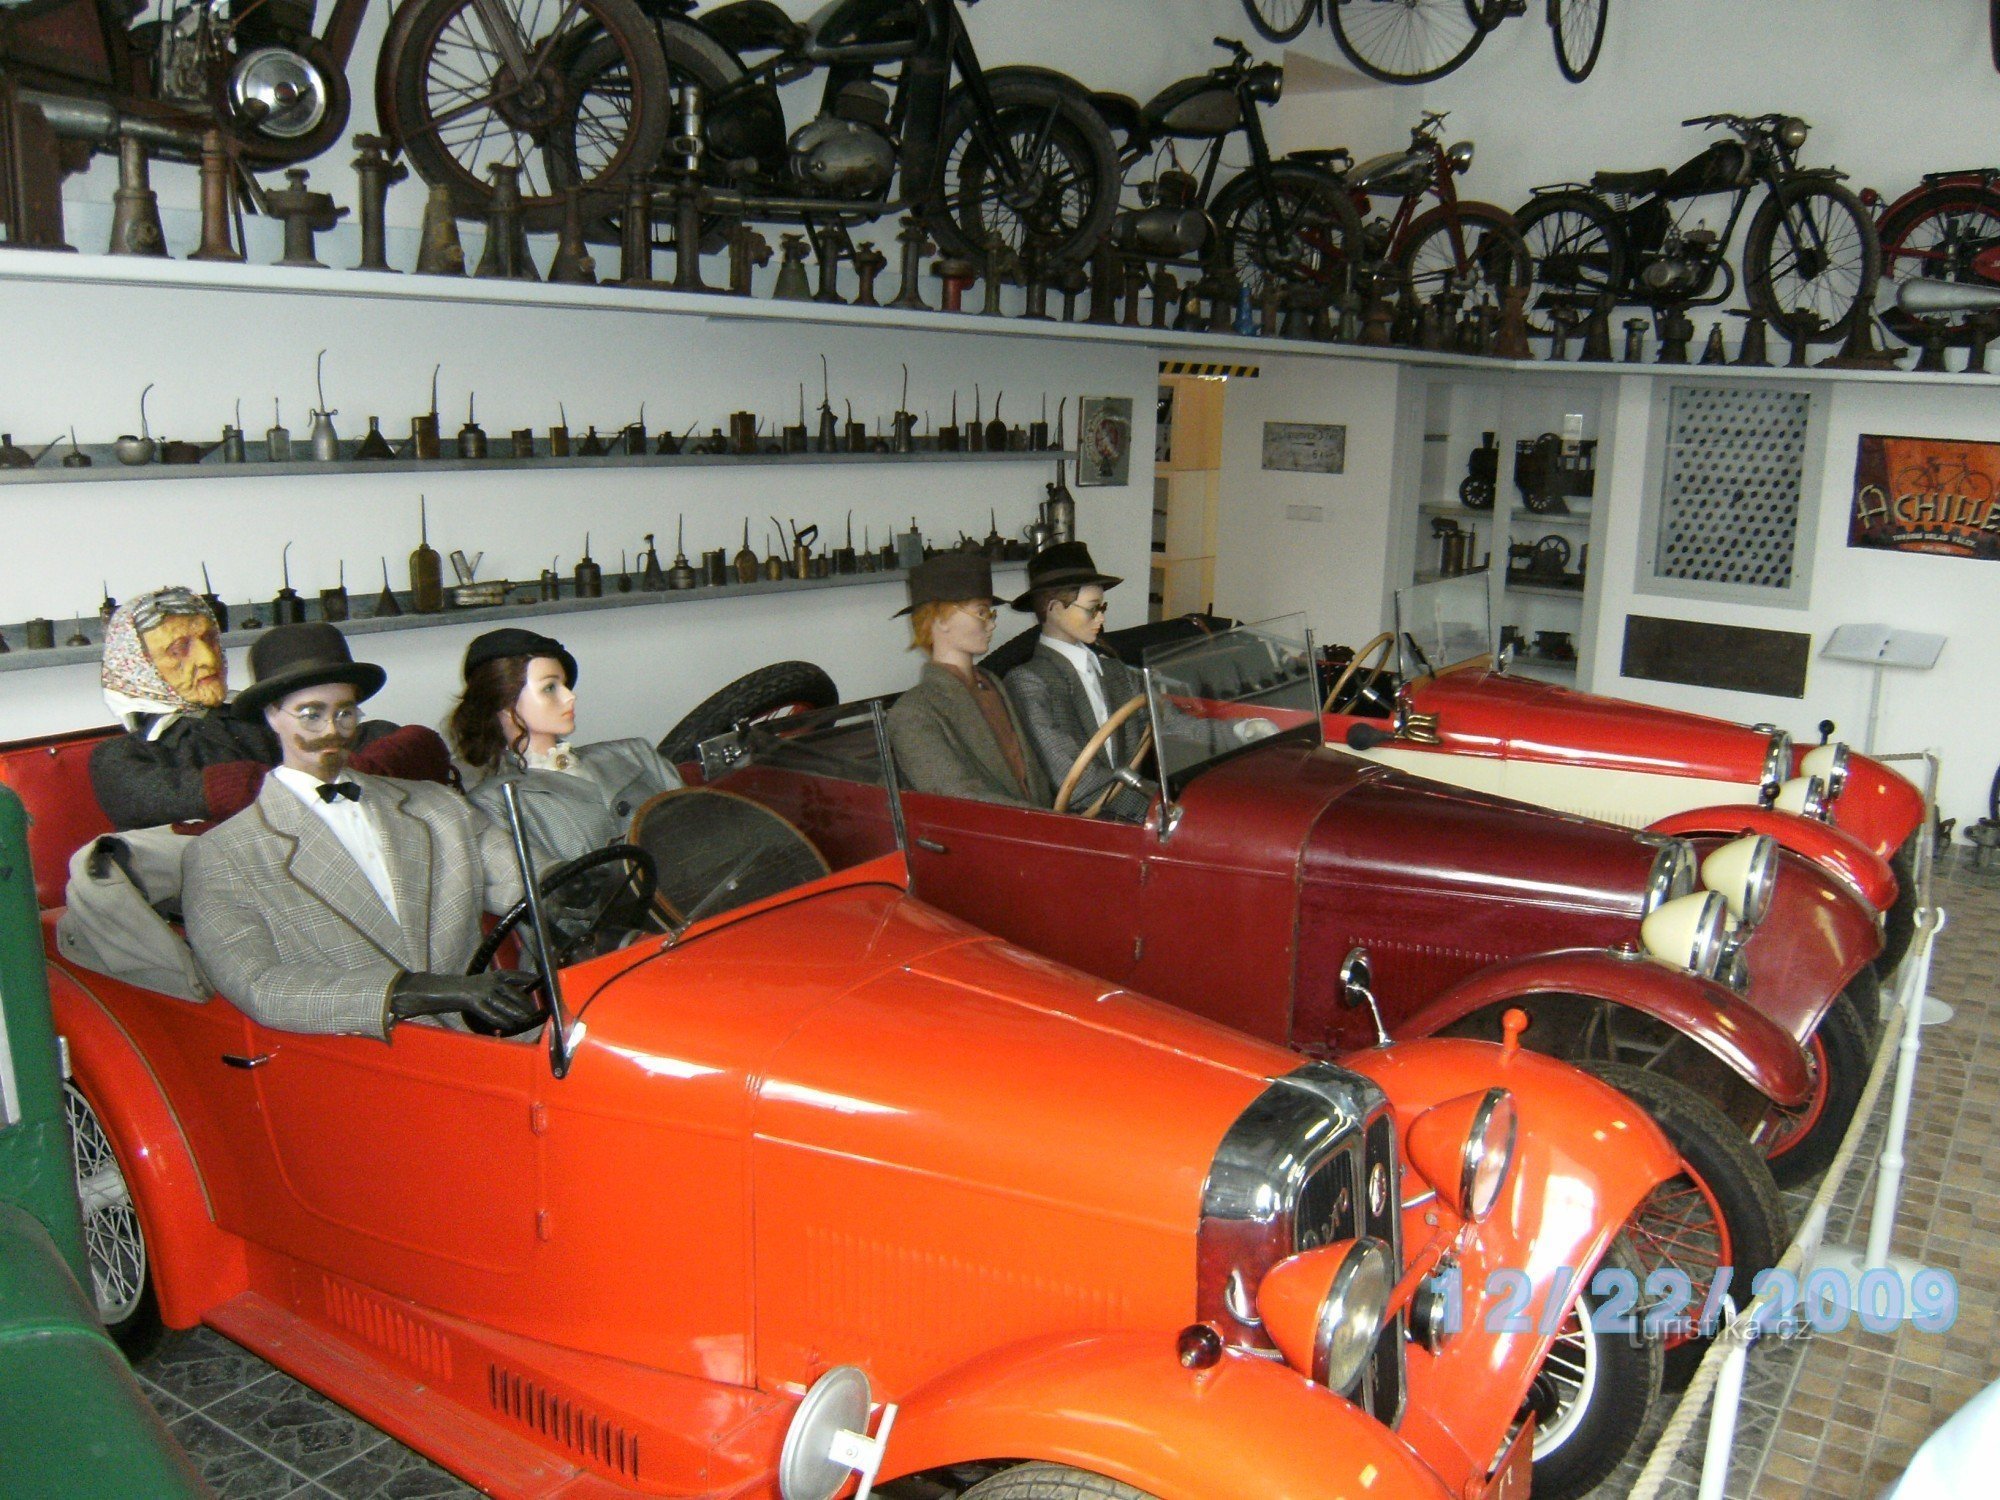 Znojmo - Bảo tàng Motoring